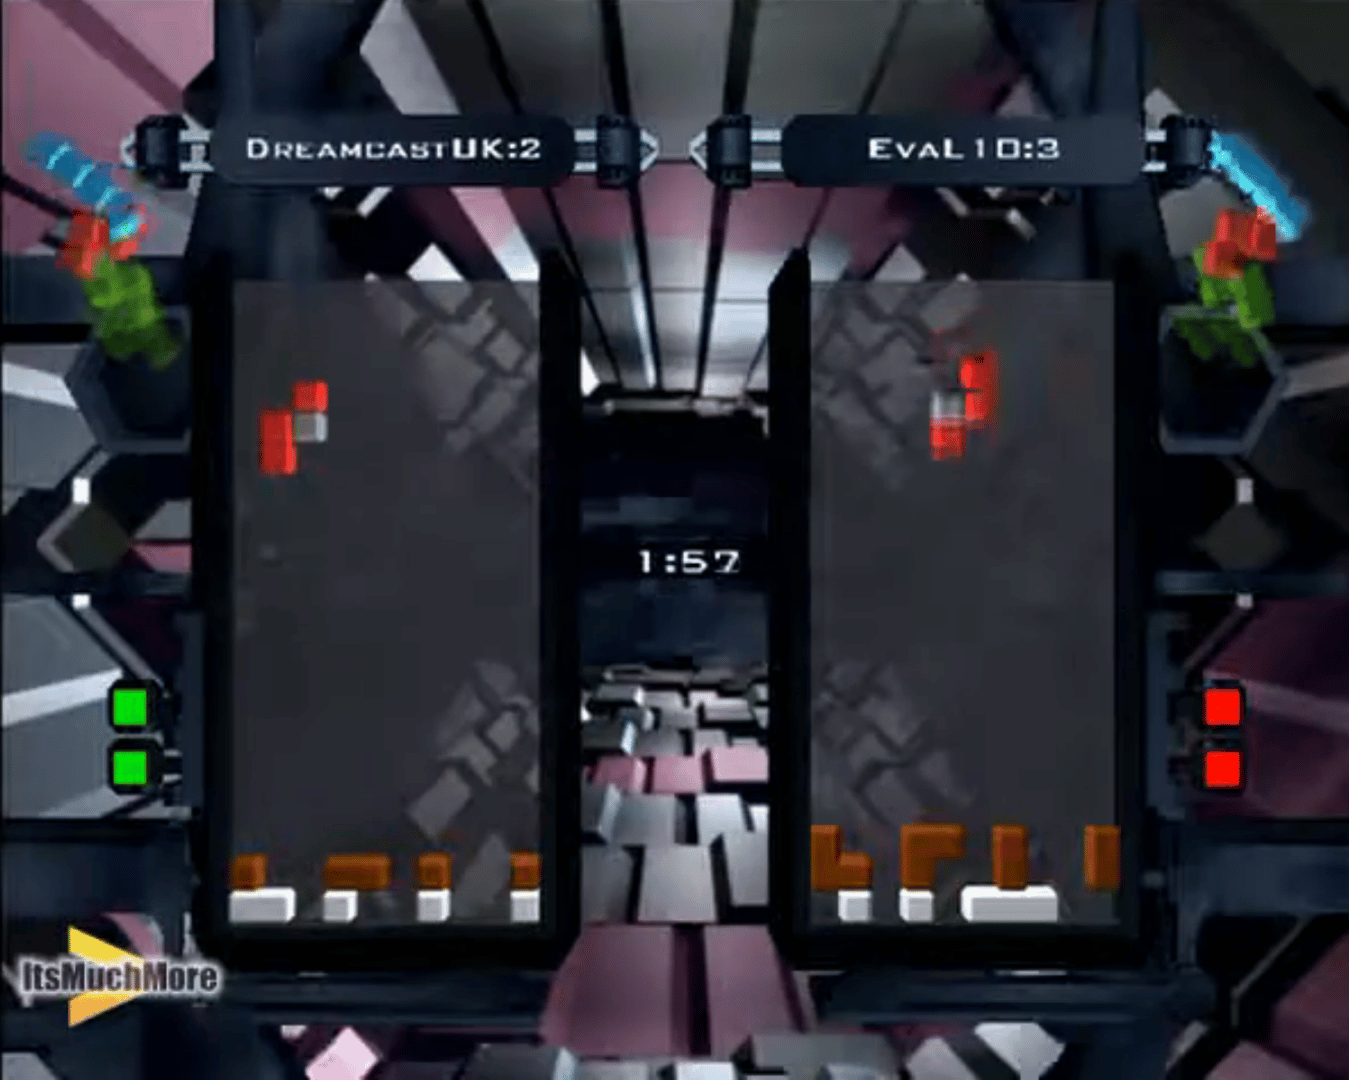 The Next Tetris On-Line Edition screenshot